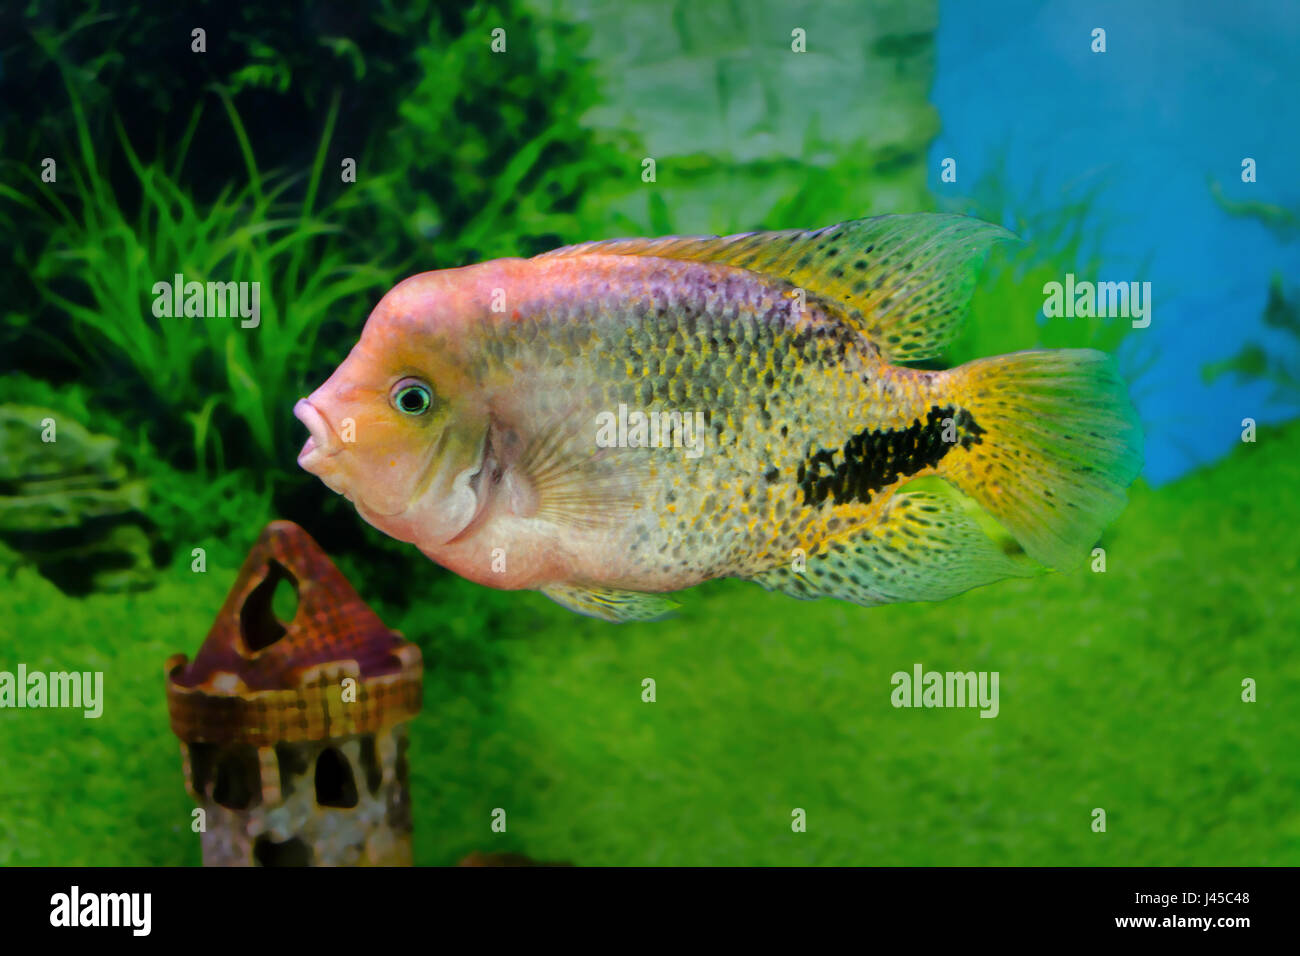 image of a beautiful aquarium fish Cichlasoma synspilumn Stock Photo